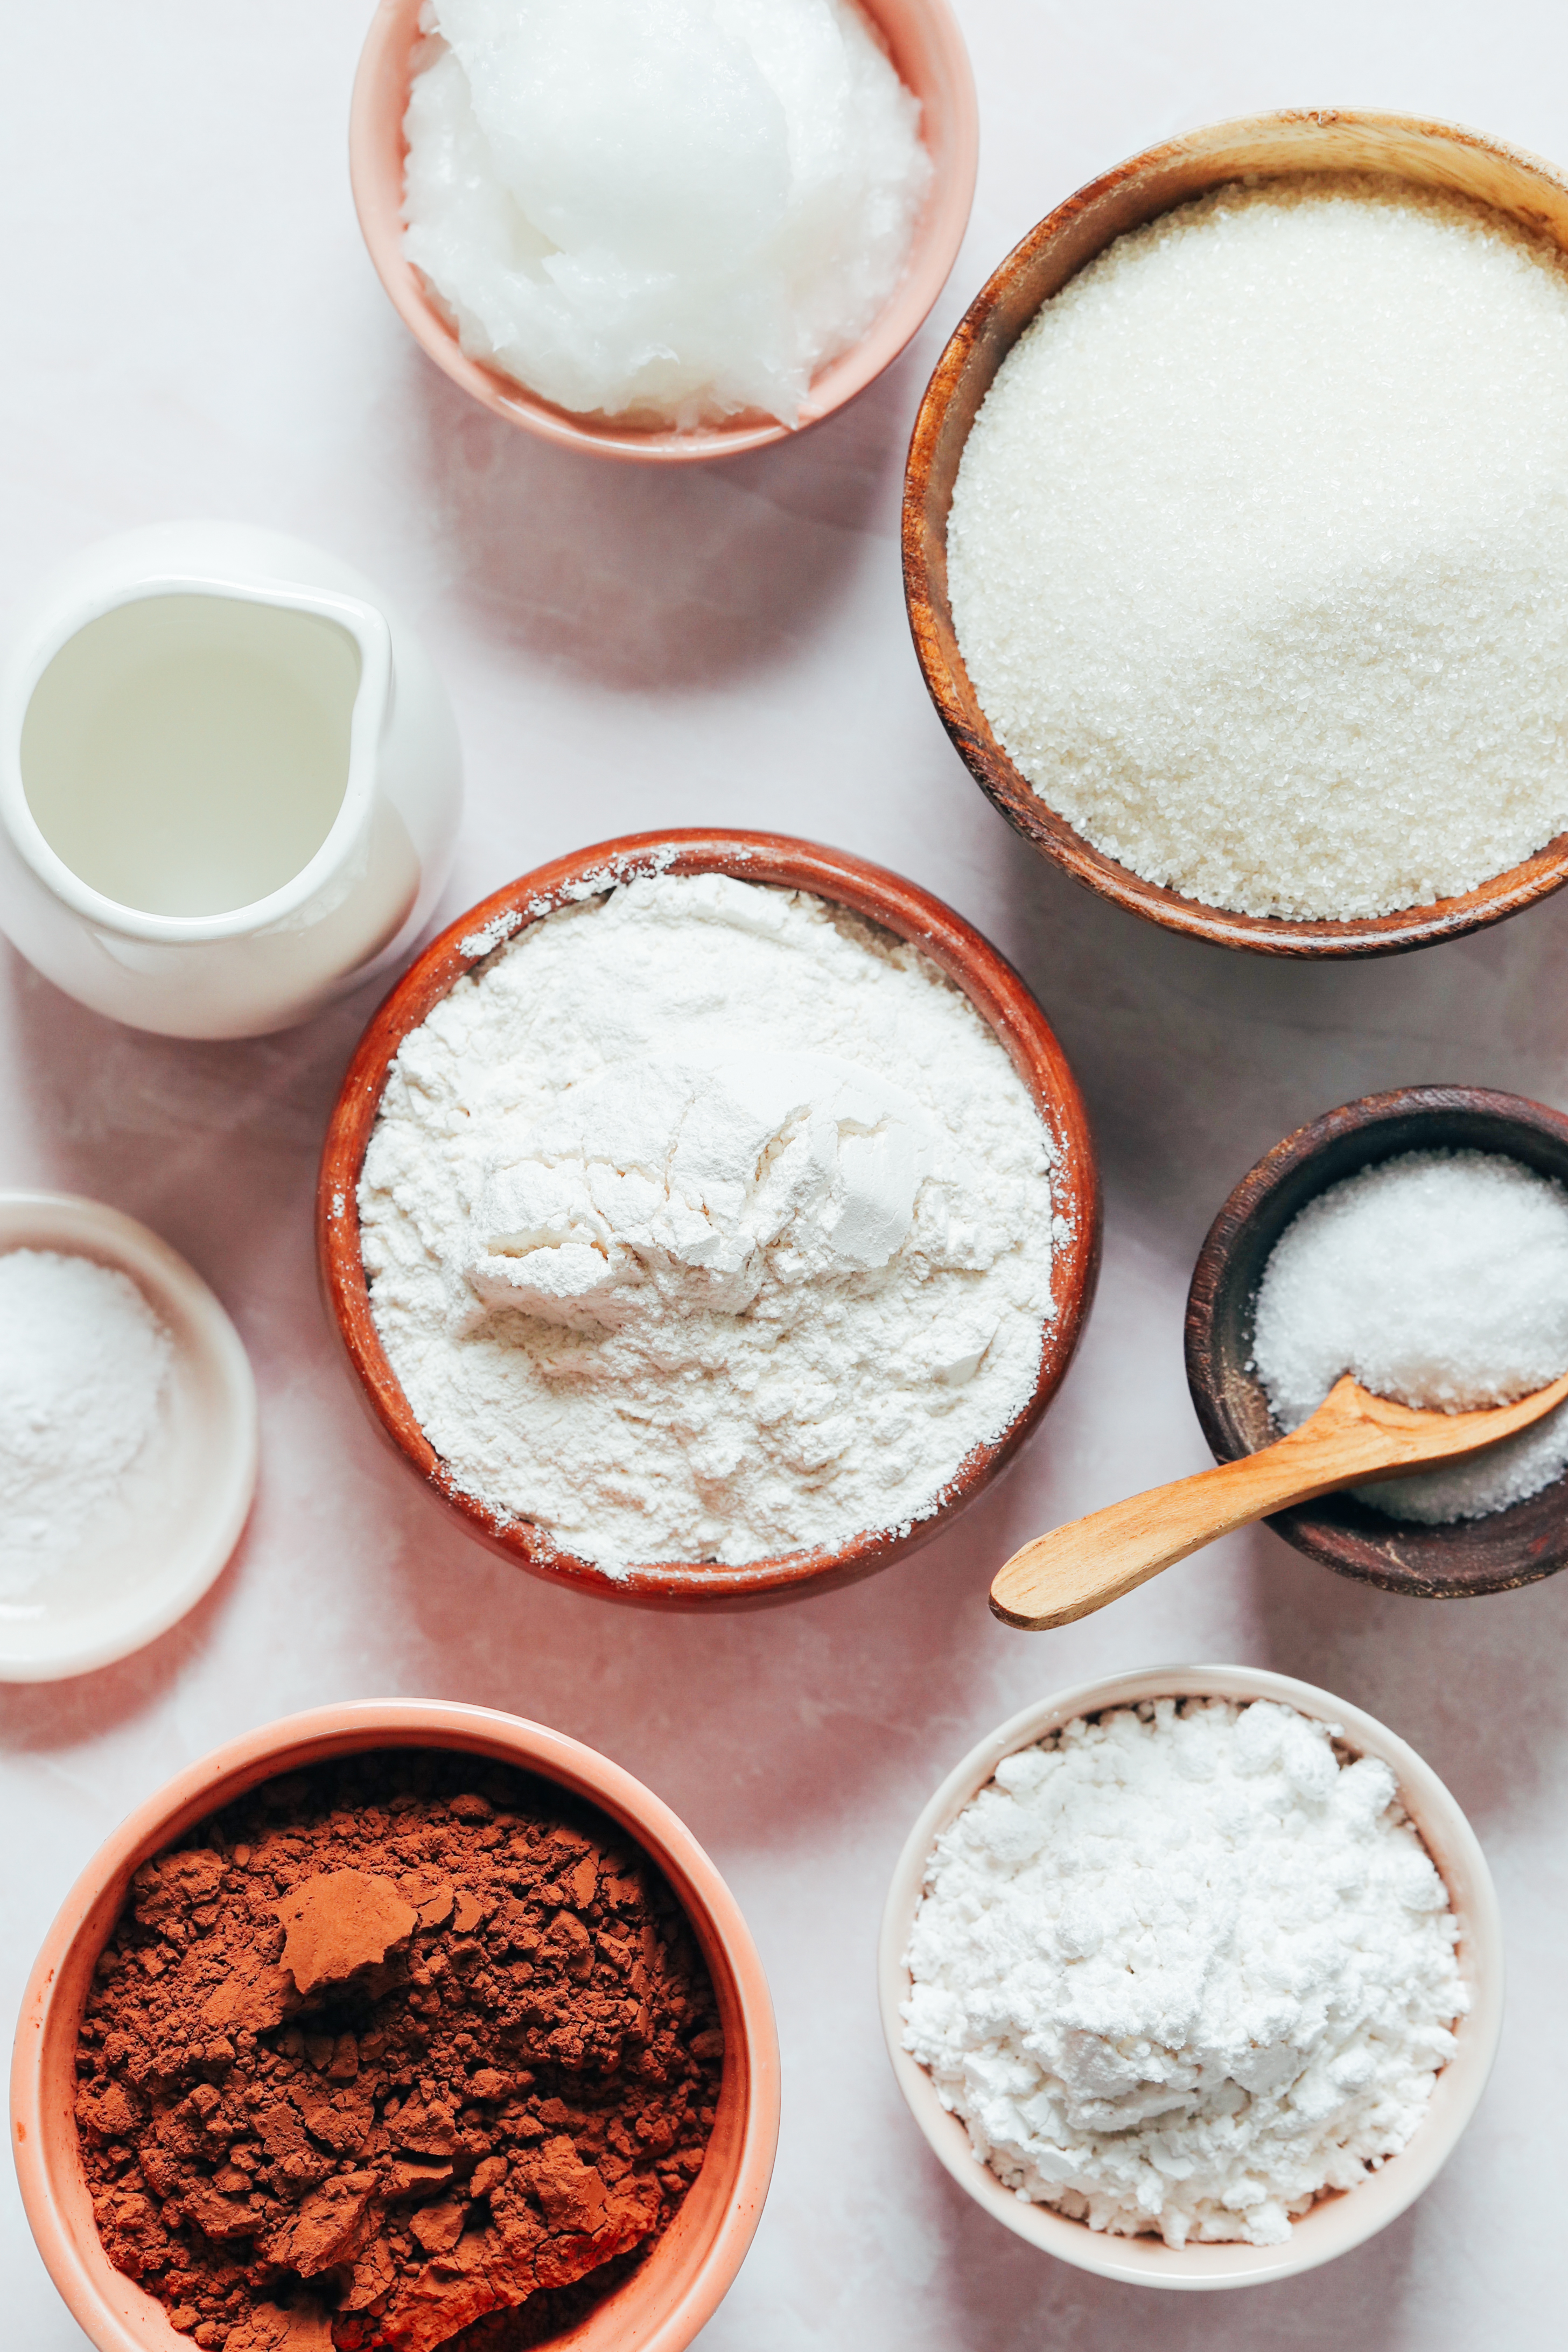 Coconut oil, cane sugar, cassava flour, salt, powdered sugar, cocoa powder, baking powder, and water